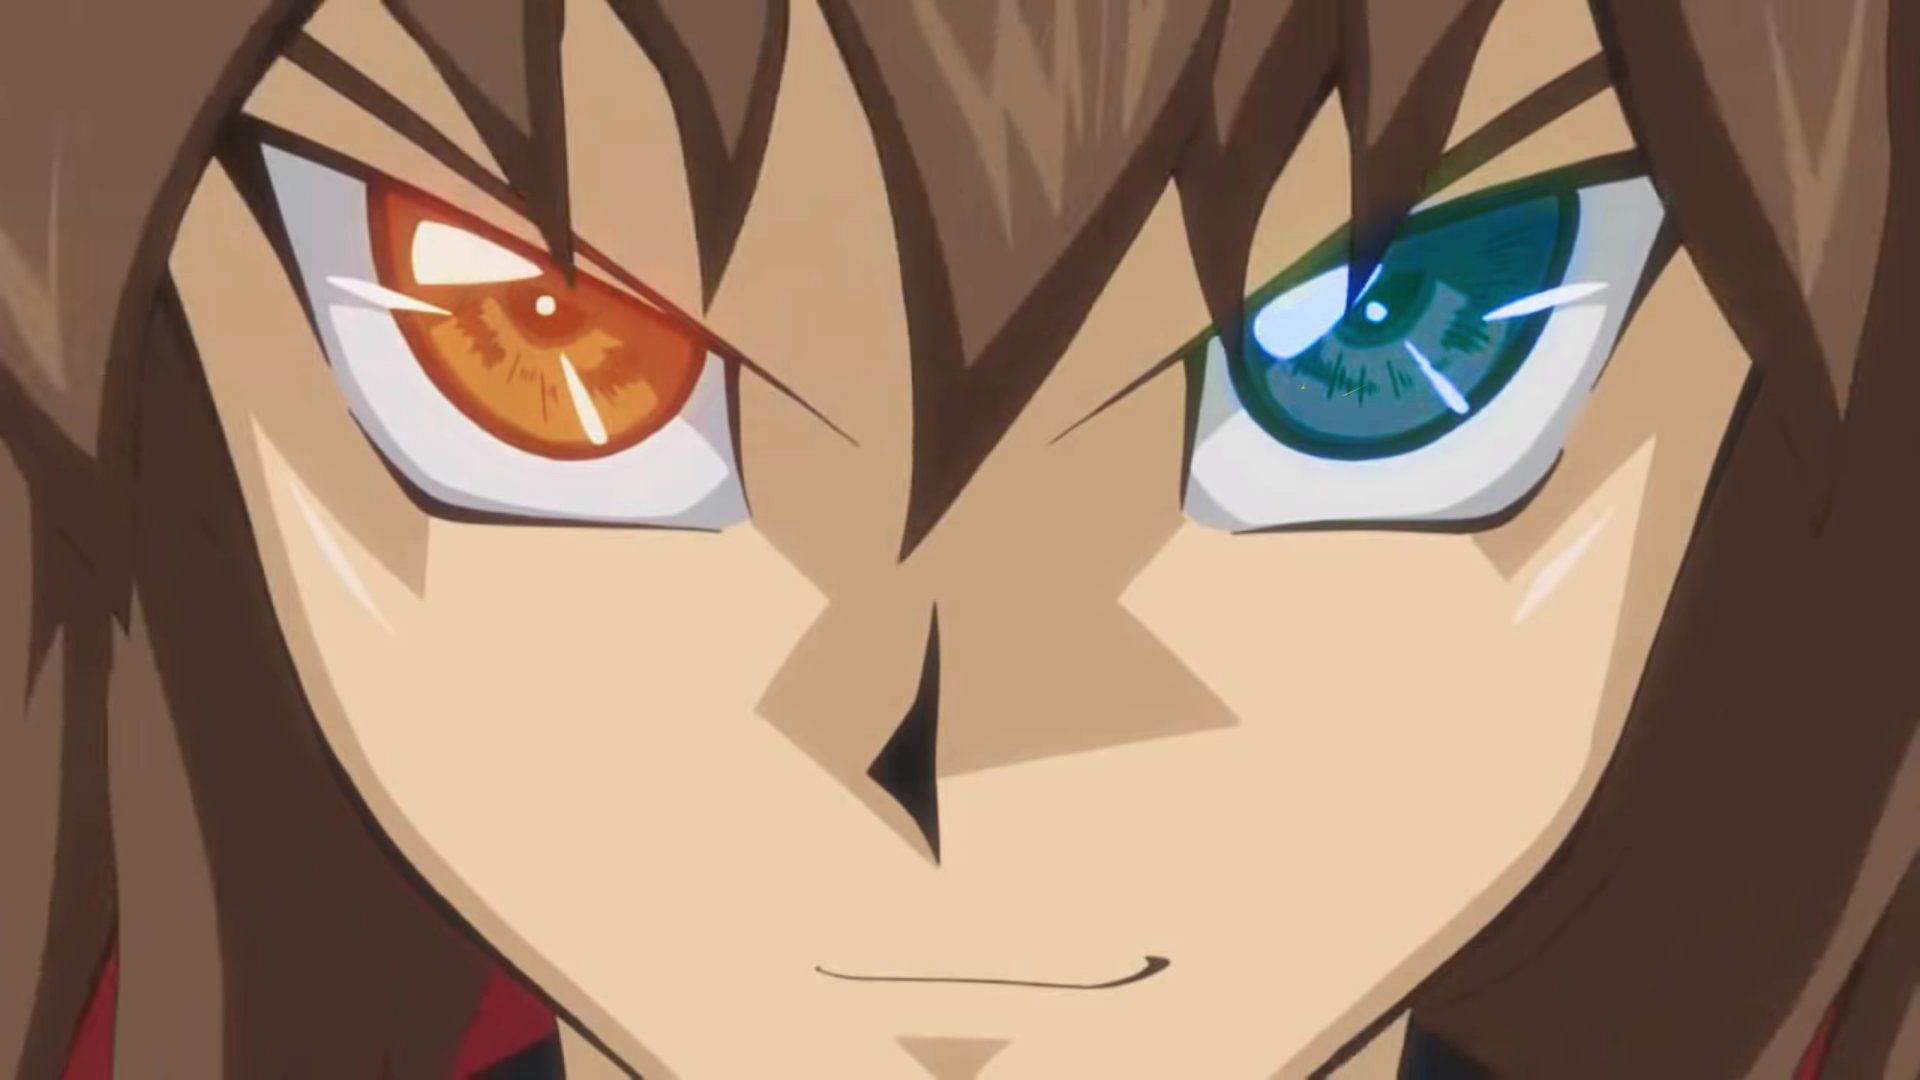 Demonic Anime Eyes - Colors of Emotions - Demonic Anime Eyes Colors Of  Emotions - Sticker | TeePublic